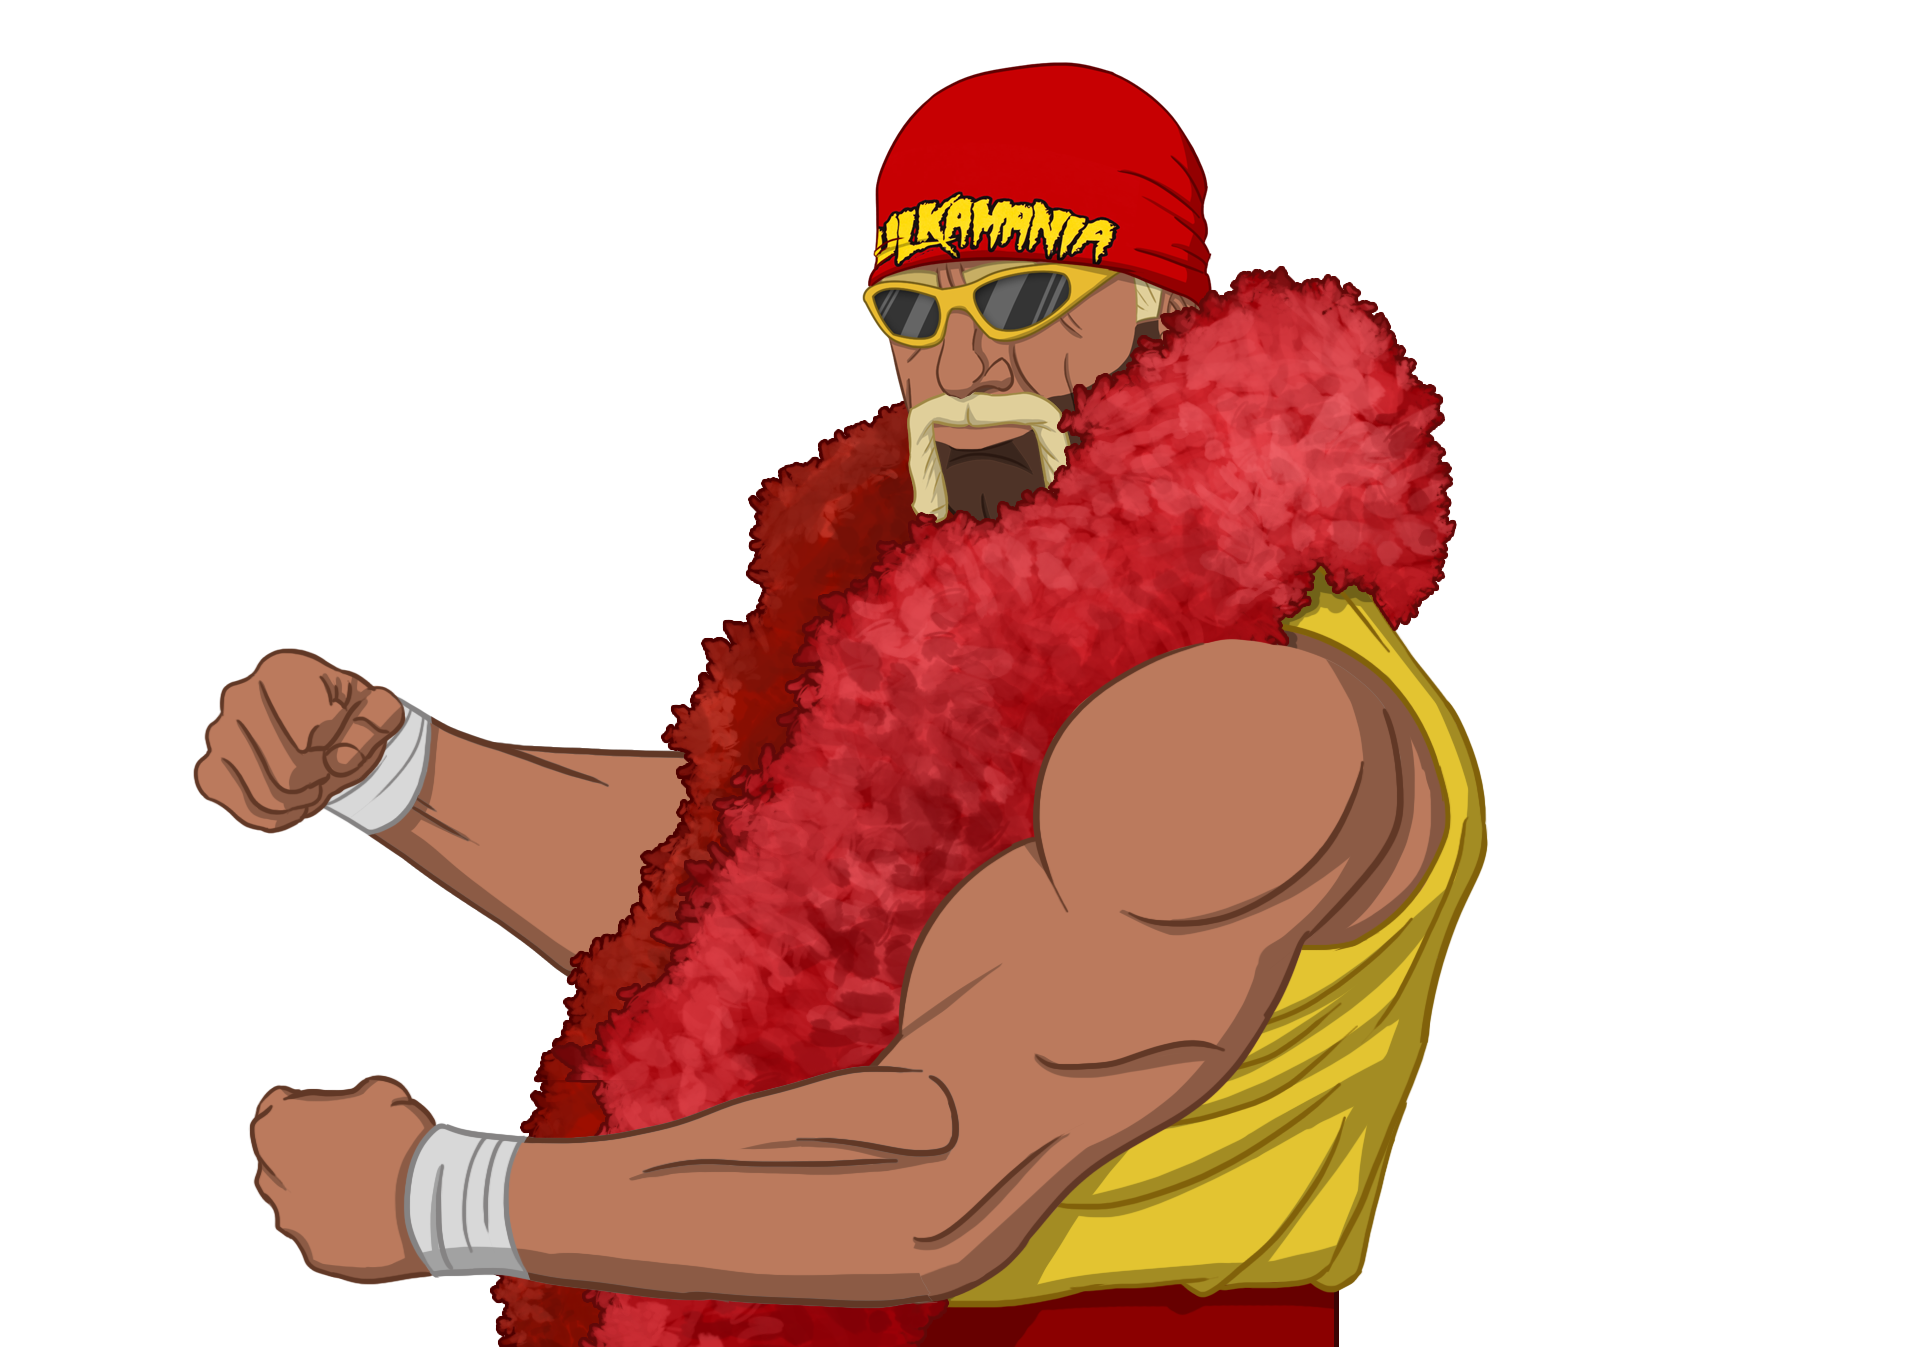 Off the Record (OTR) Hulk Hogan